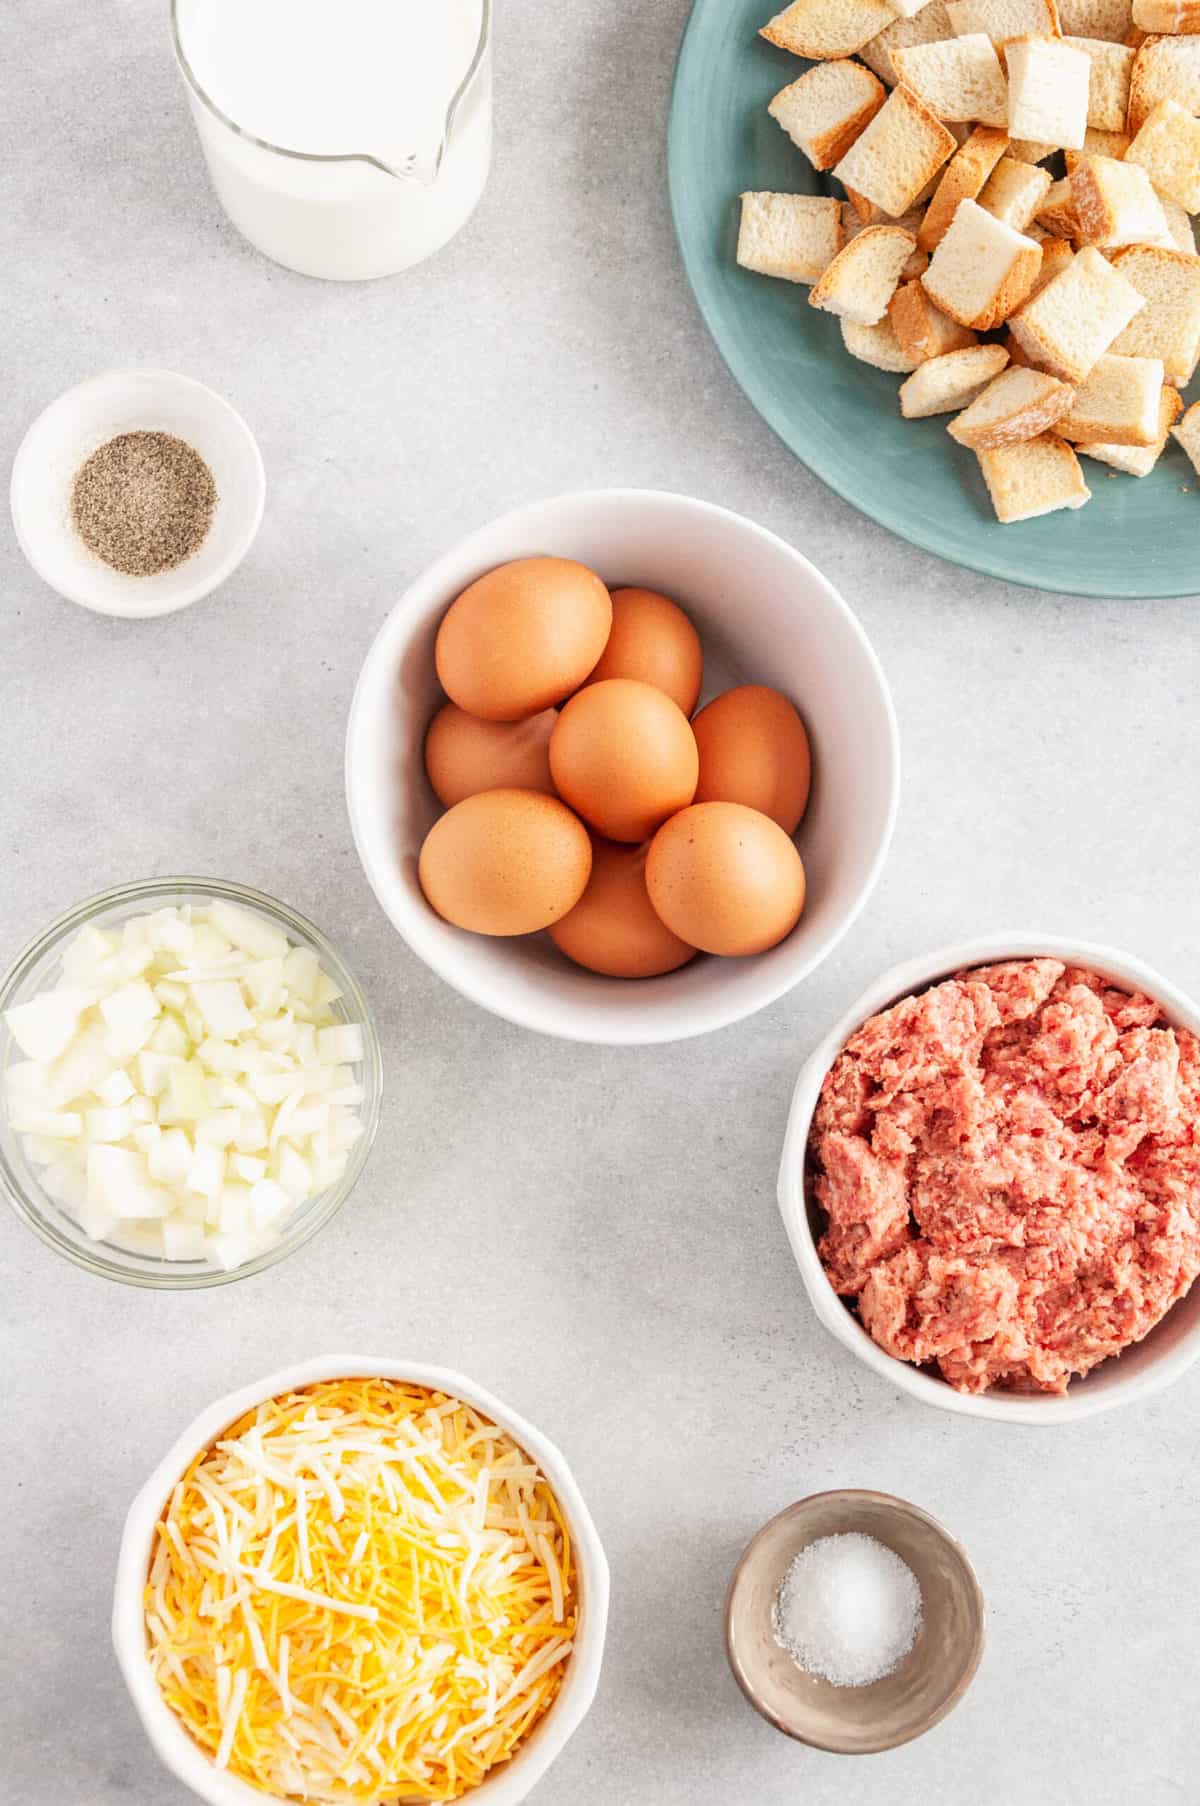 ingredients to make breakfast casserole with bread